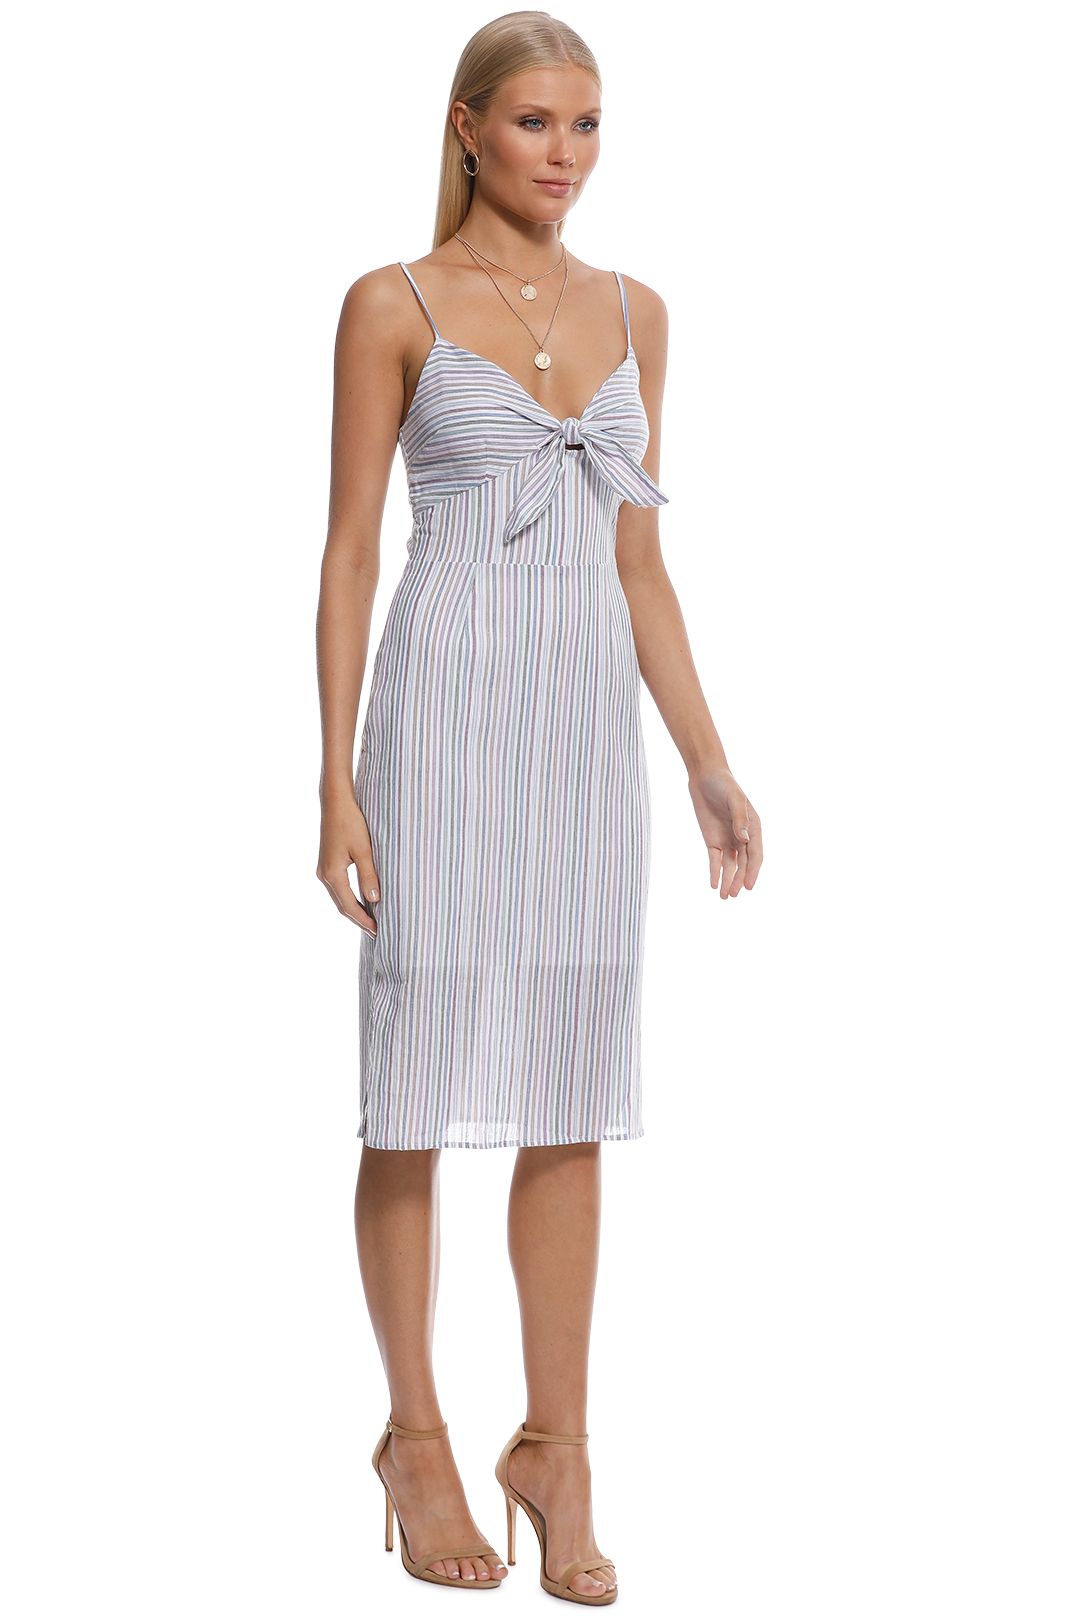 Cooper St - Bay Knot Stripe Dress - Blue Stripe - Side